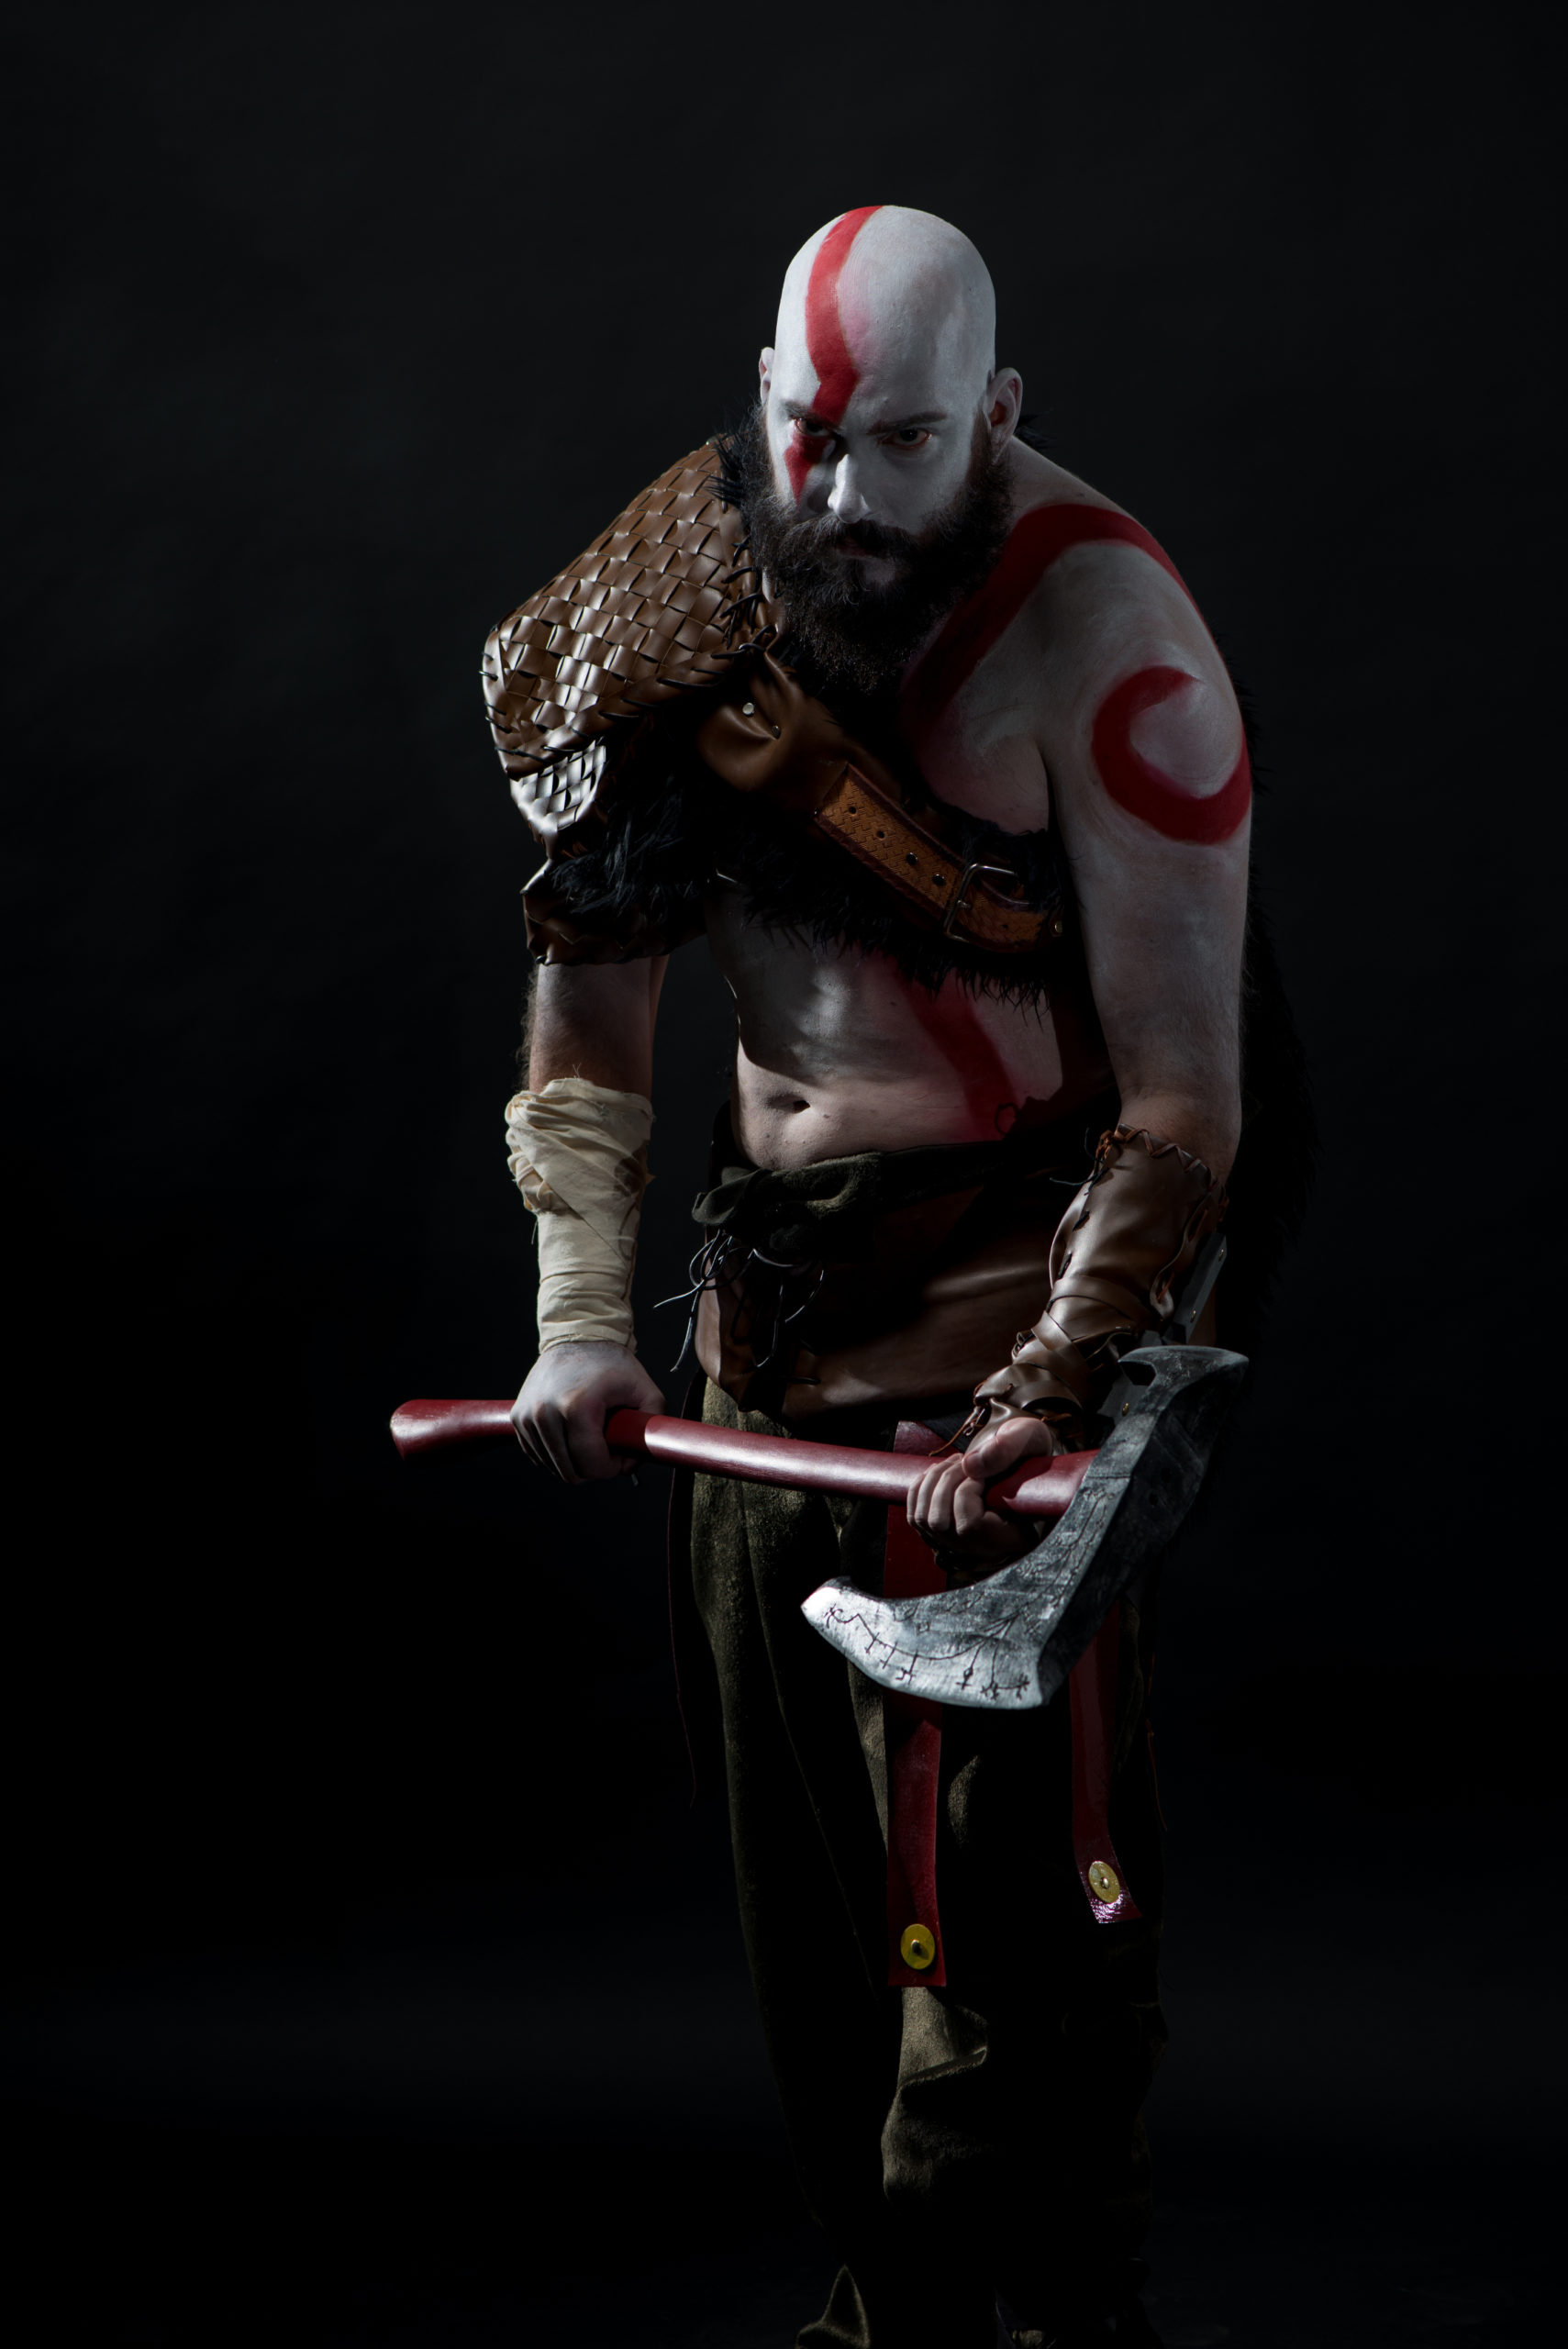 He Is Kratos, The Cosplay God Of War